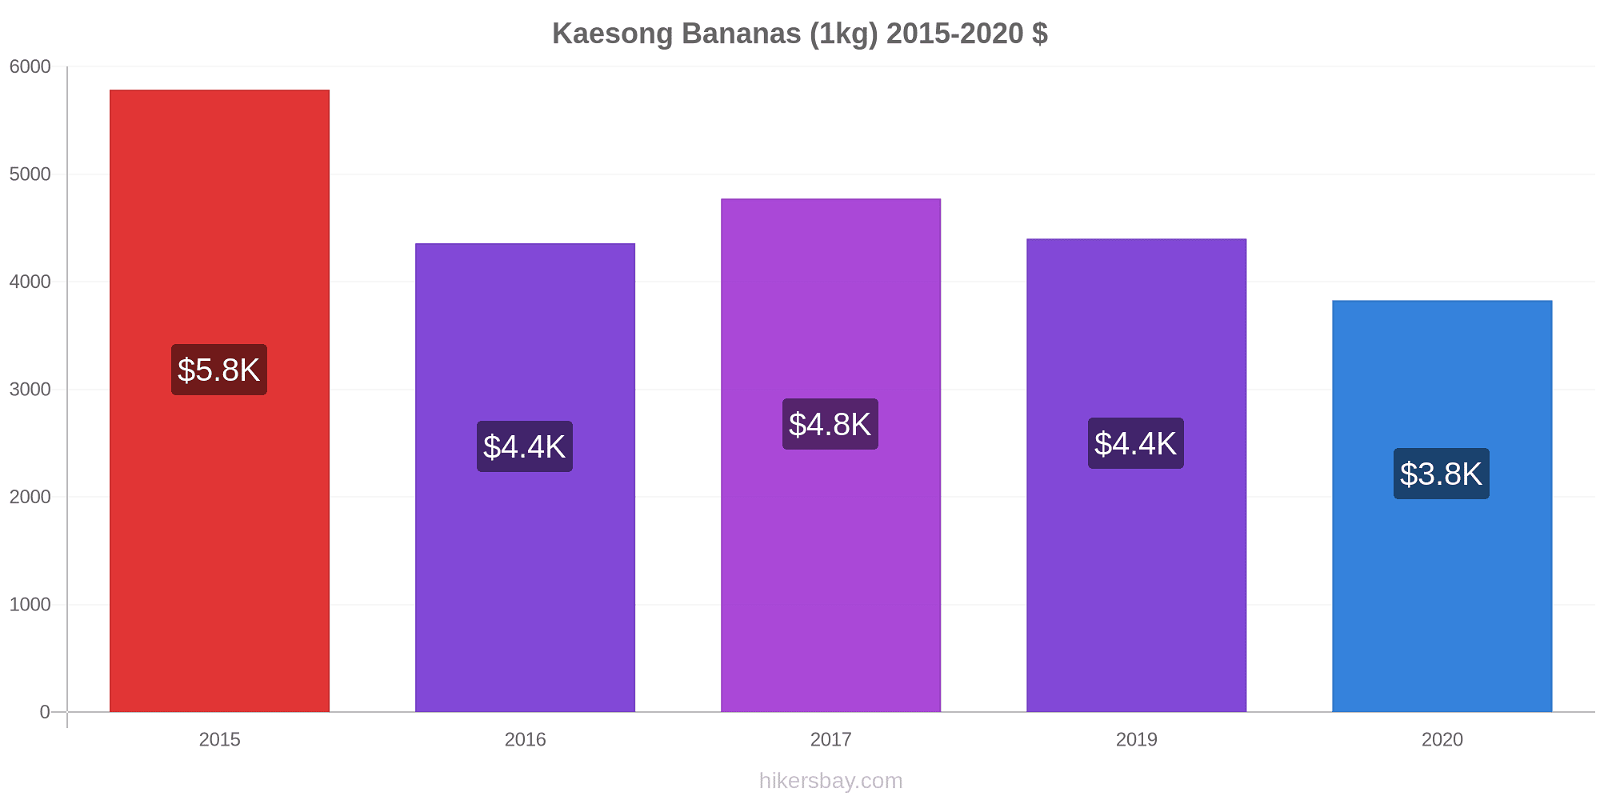 Kaesong price changes Bananas (1kg) hikersbay.com